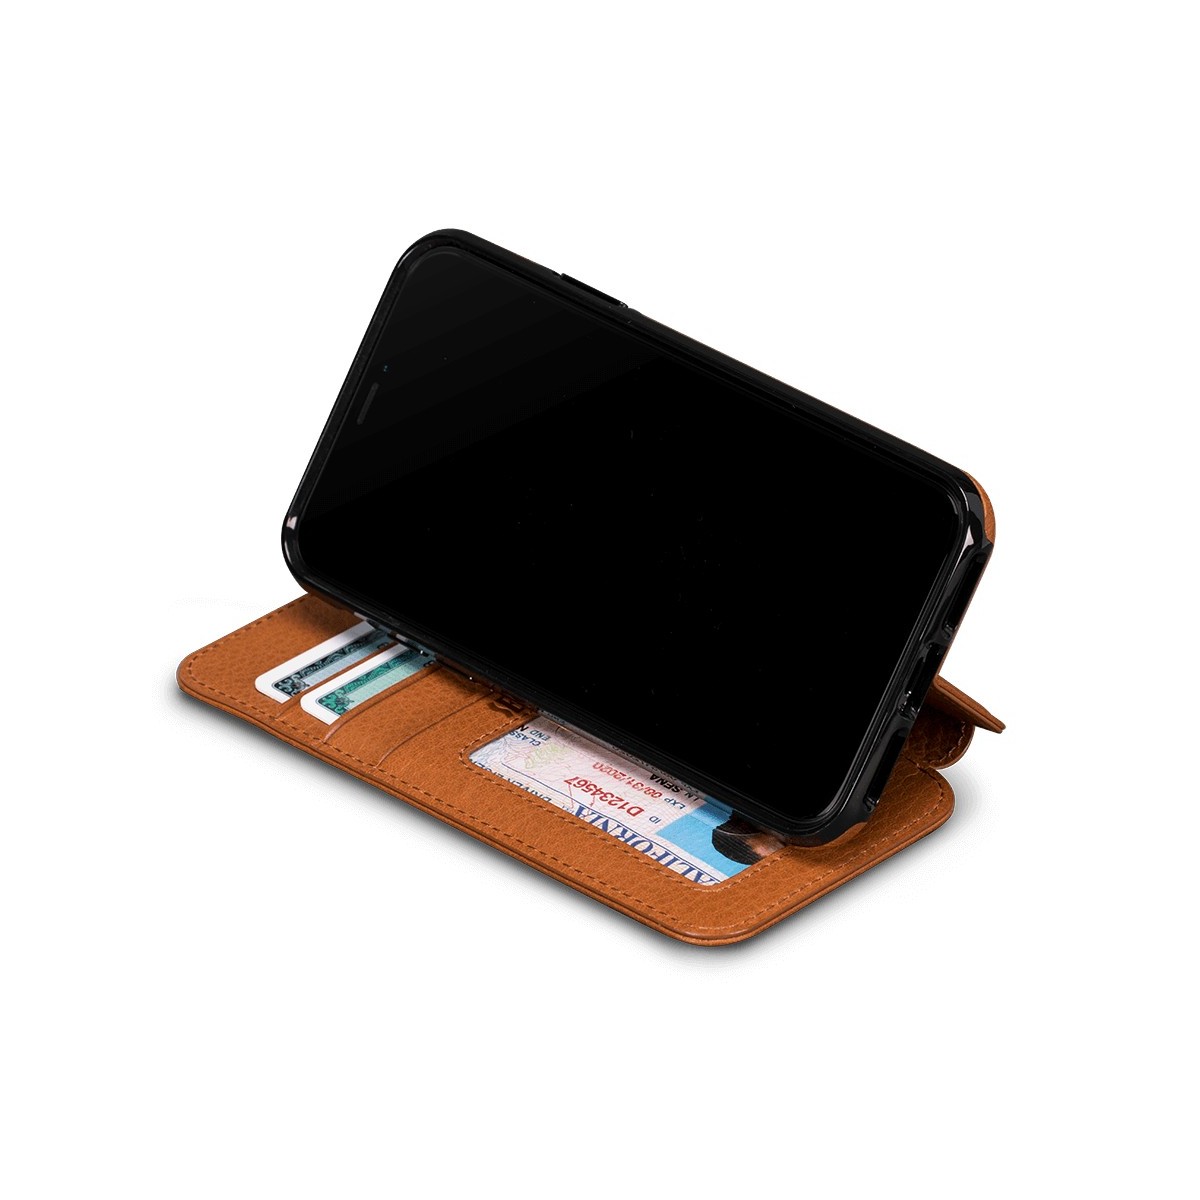 Etui iPhone Xs / iPhone X en cuir véritable porte-cartes marron - Sena Cases